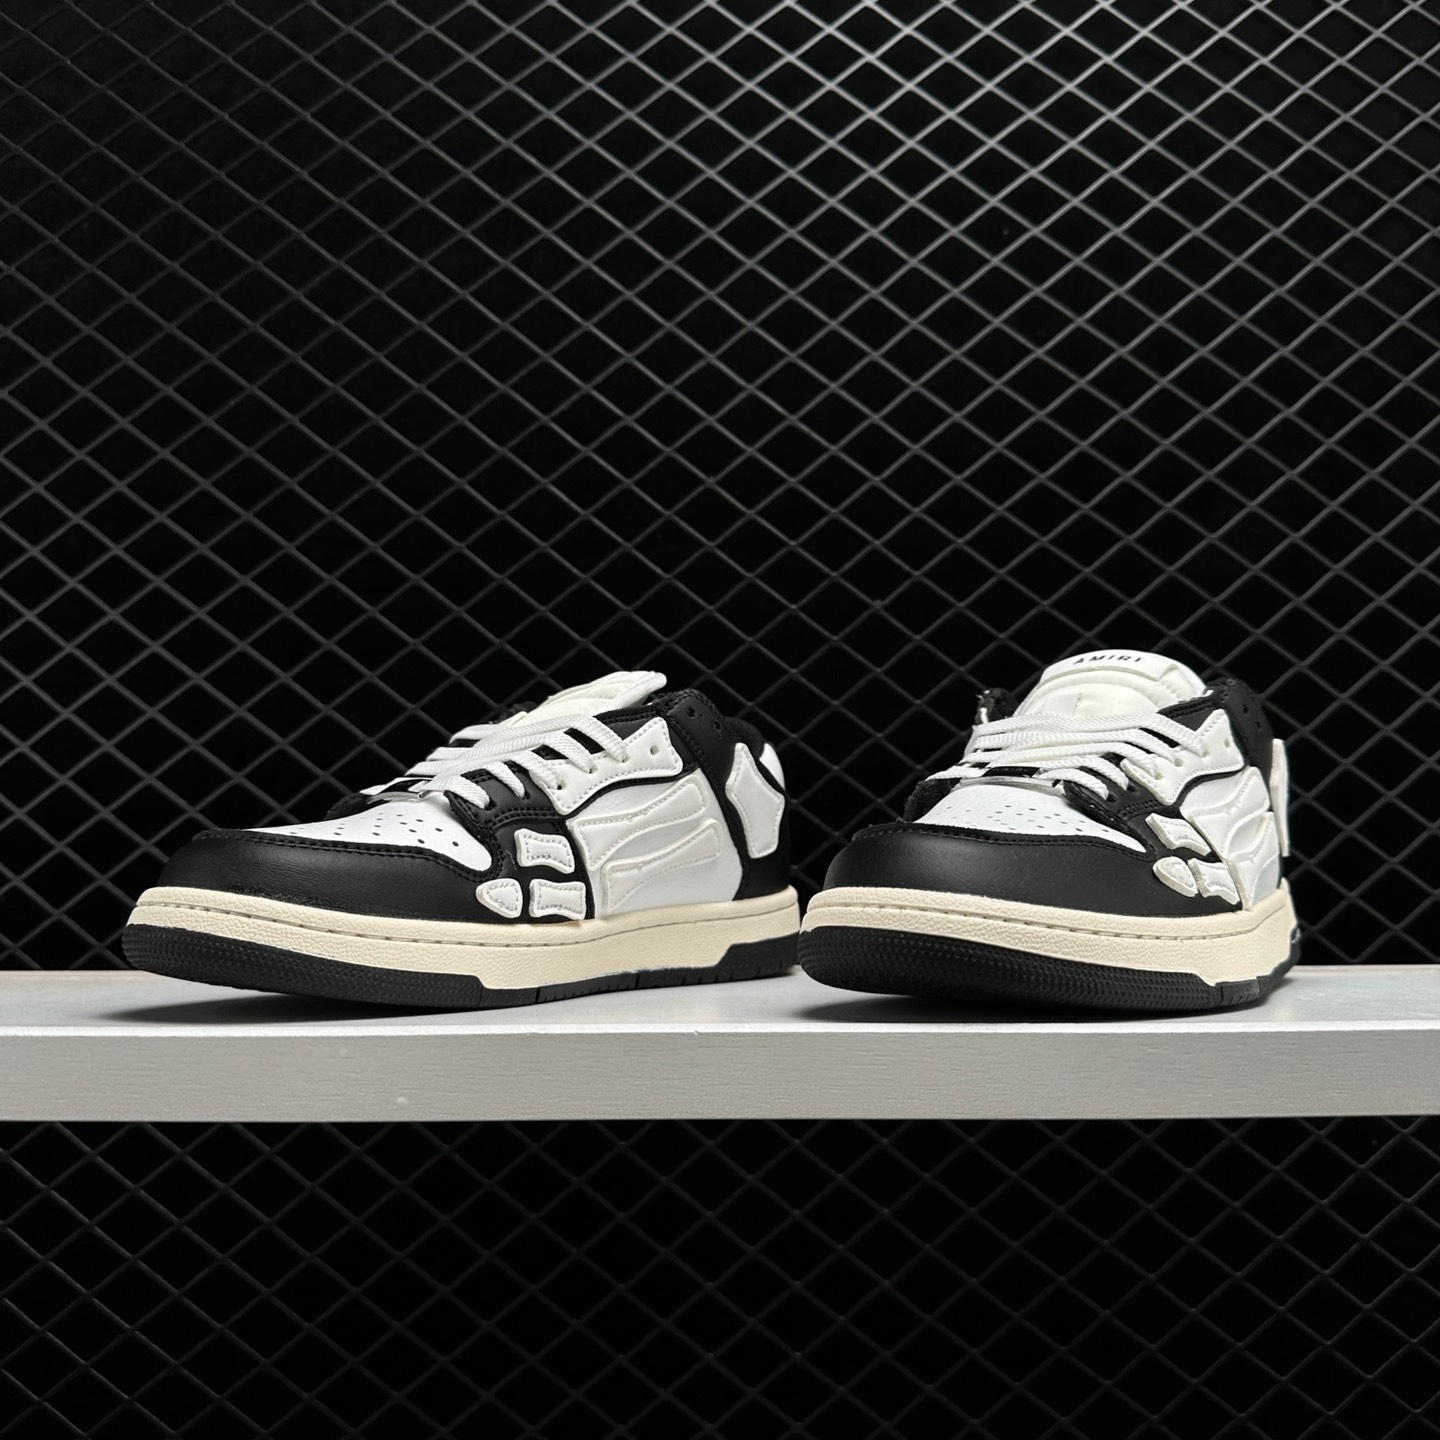 Amiri Skel Top Low Black White PXMFS002 - Stylish and Sleek Shoes